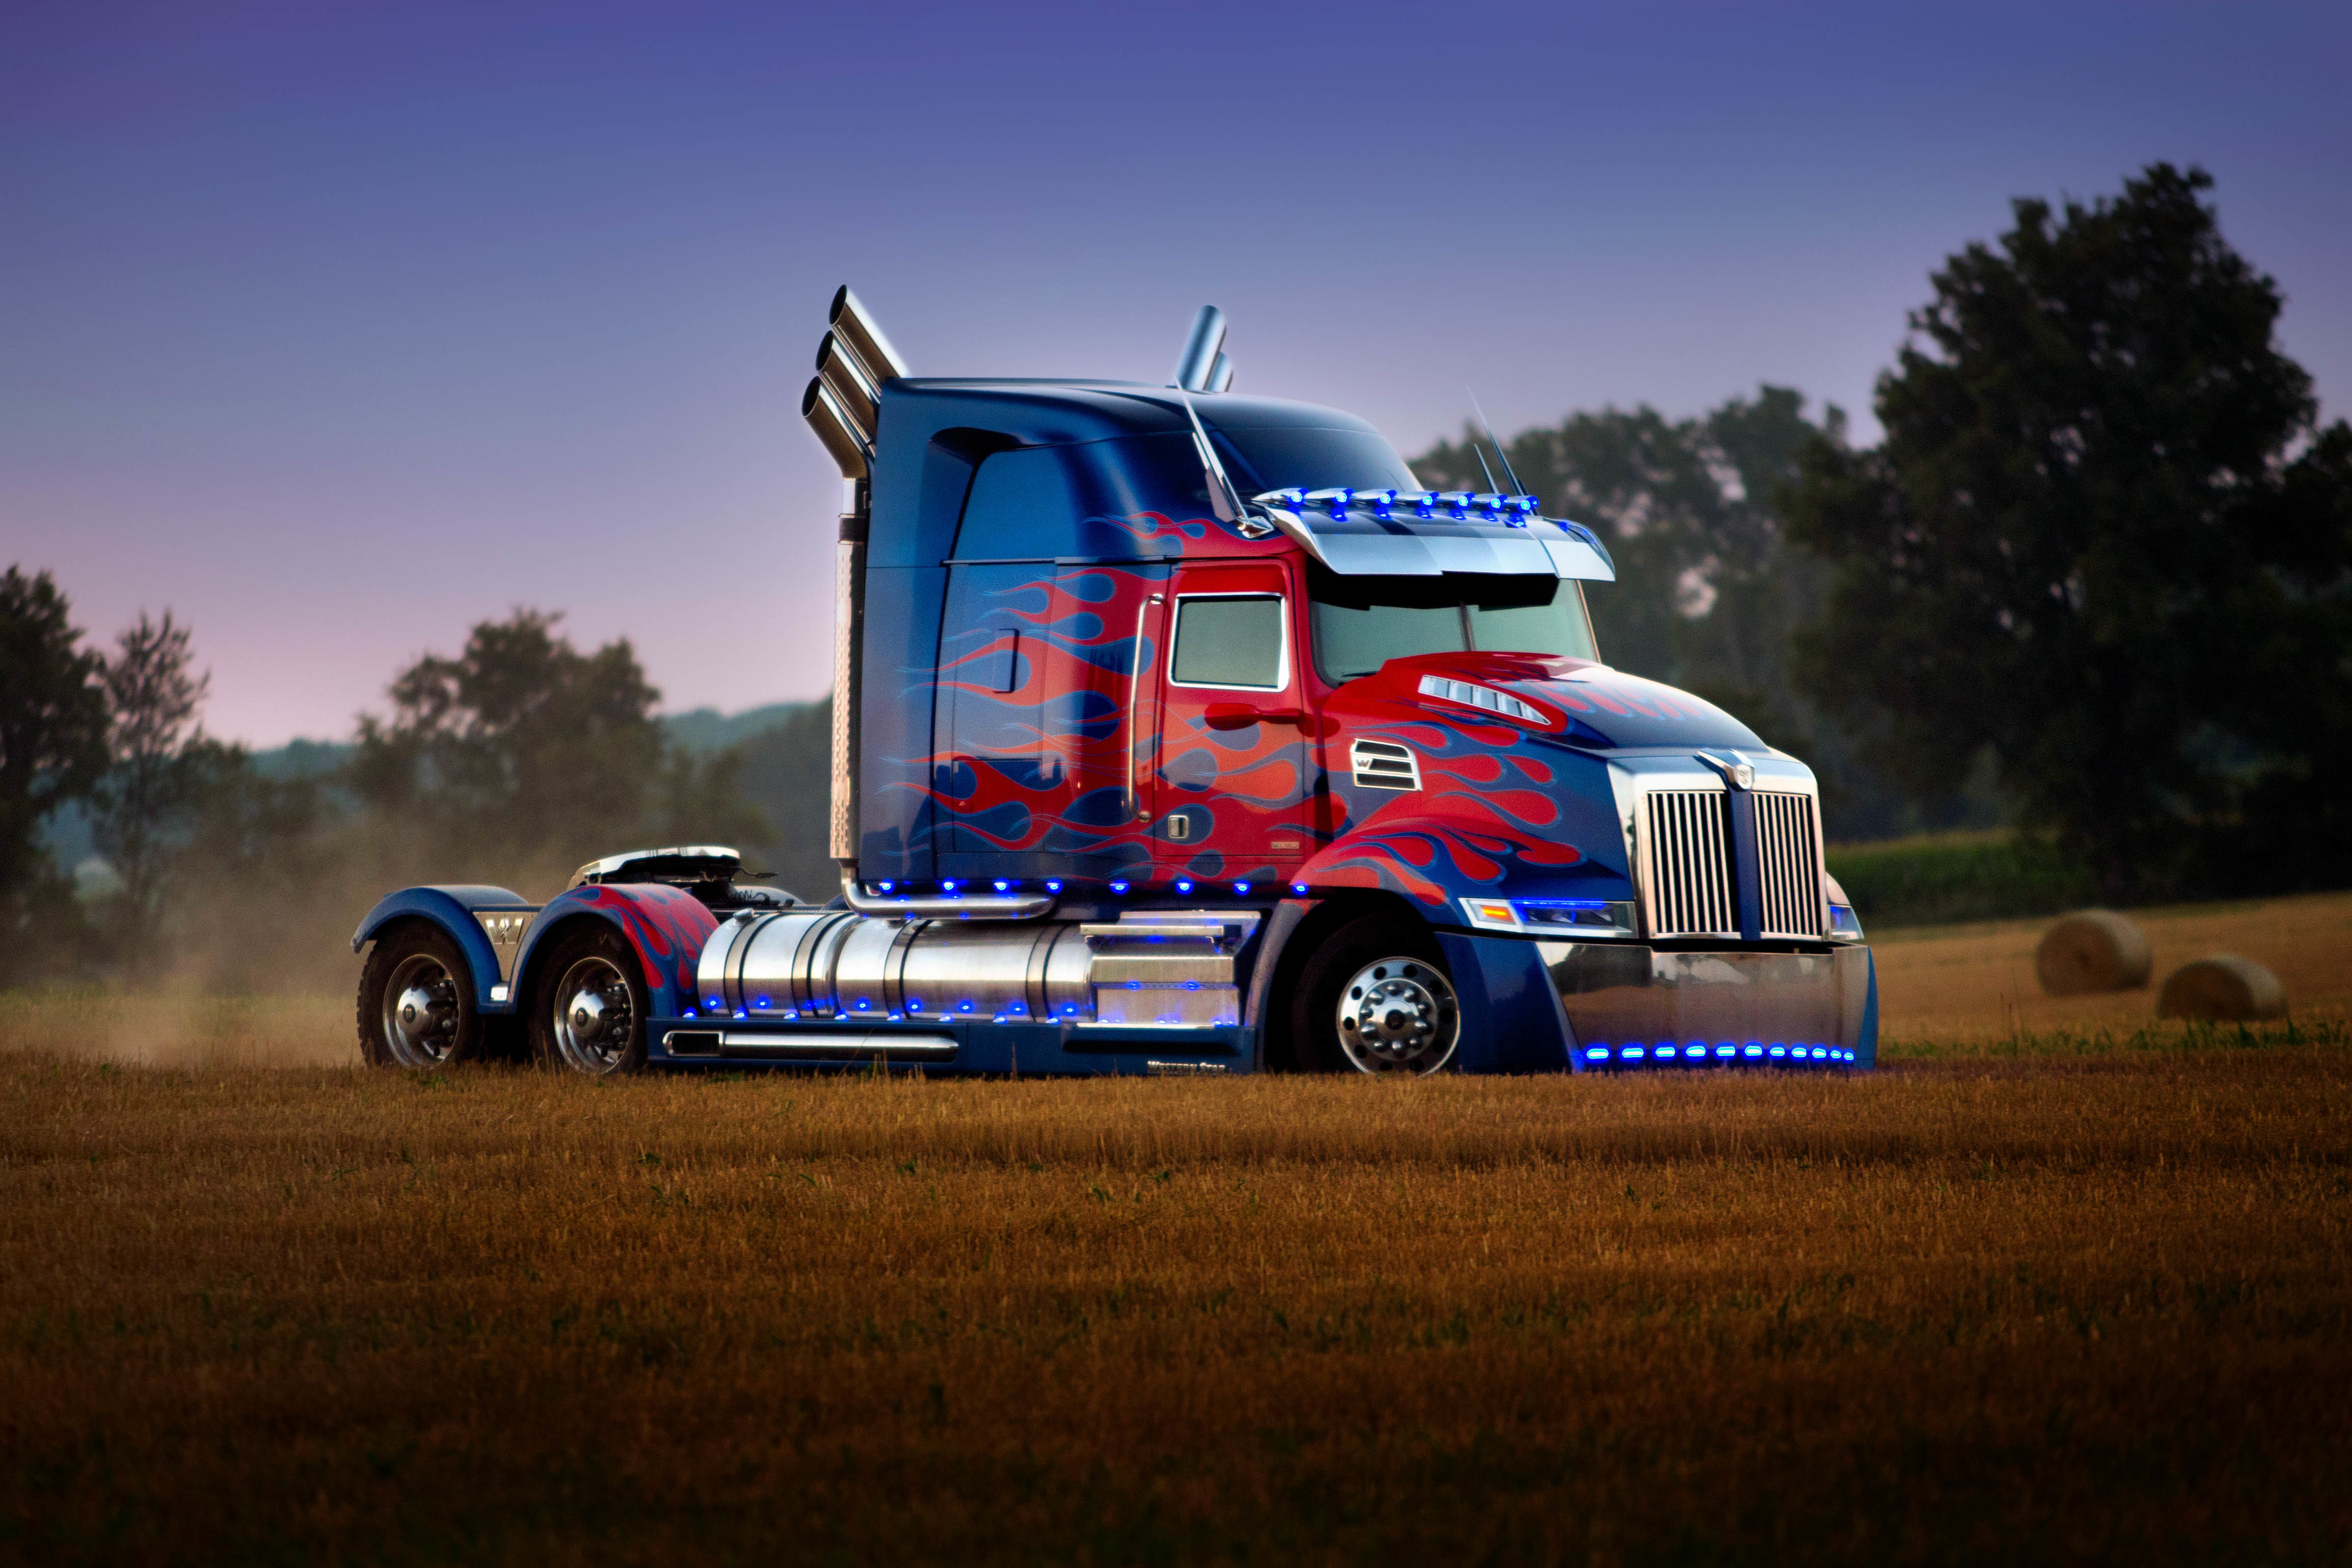 Картинка: Авто, грузовик, Optimus Prime Truck, тюнинг, поле